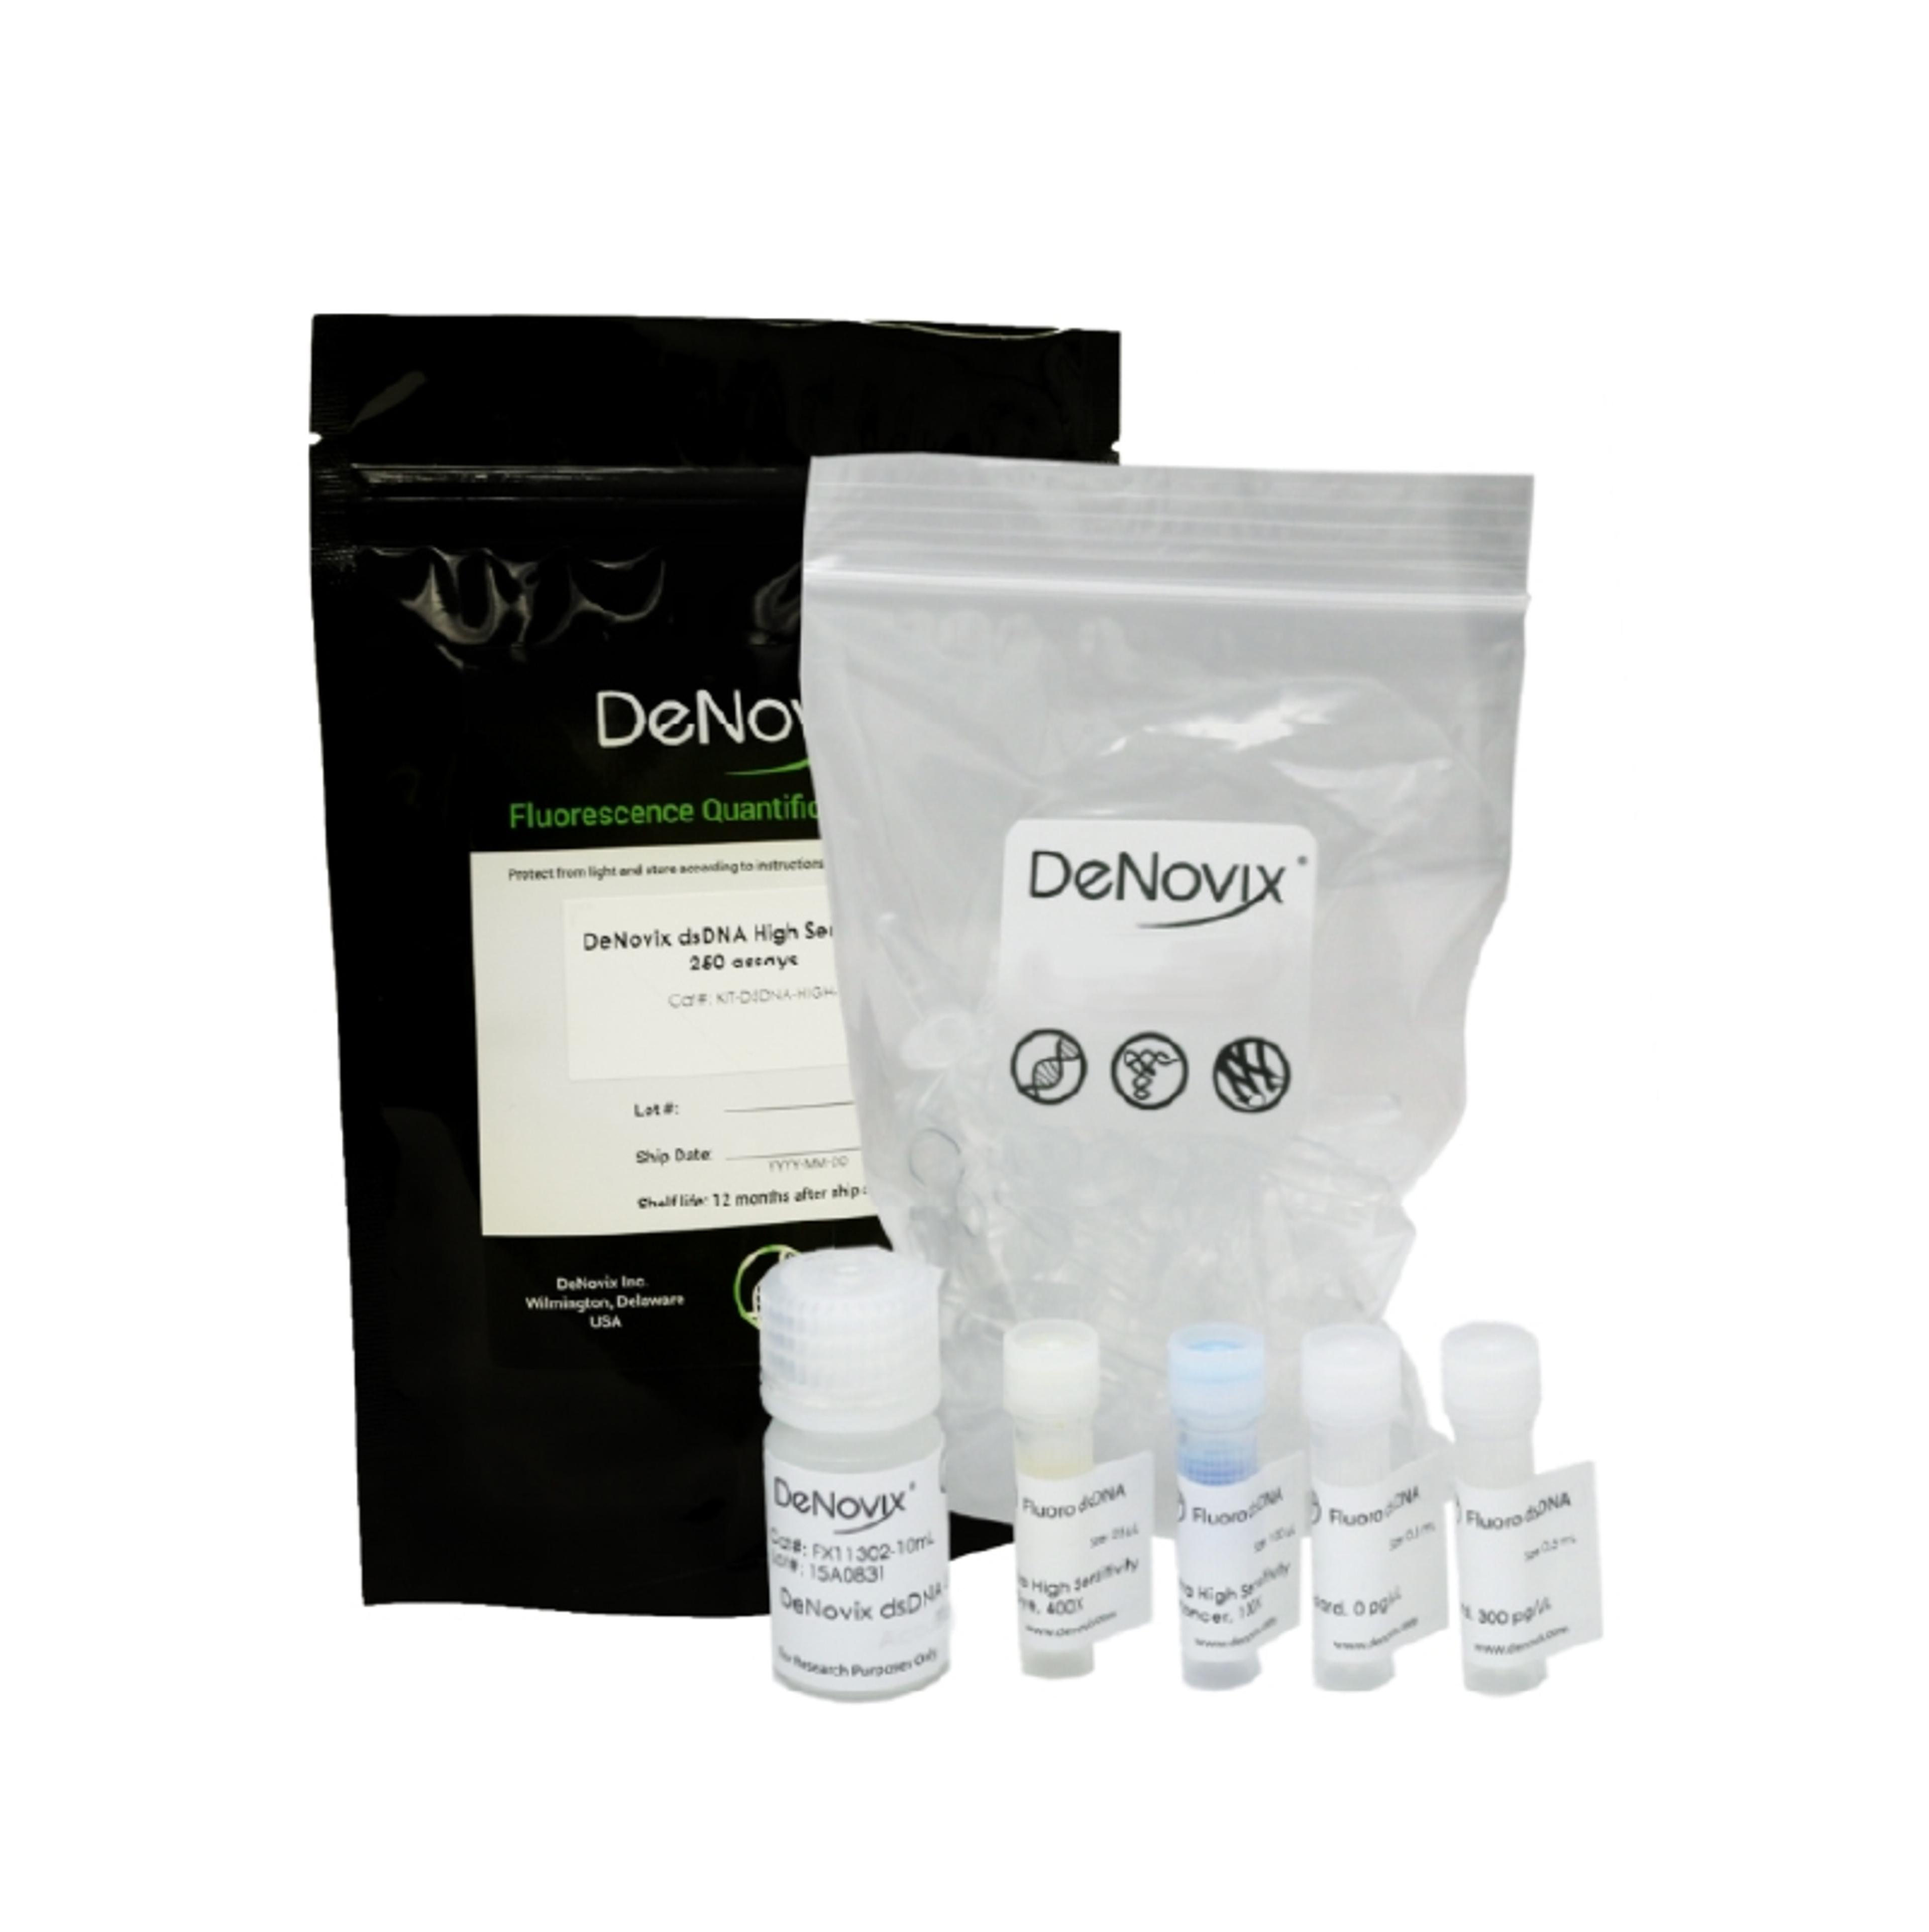 DeNovix dsDNA Quantification Assays